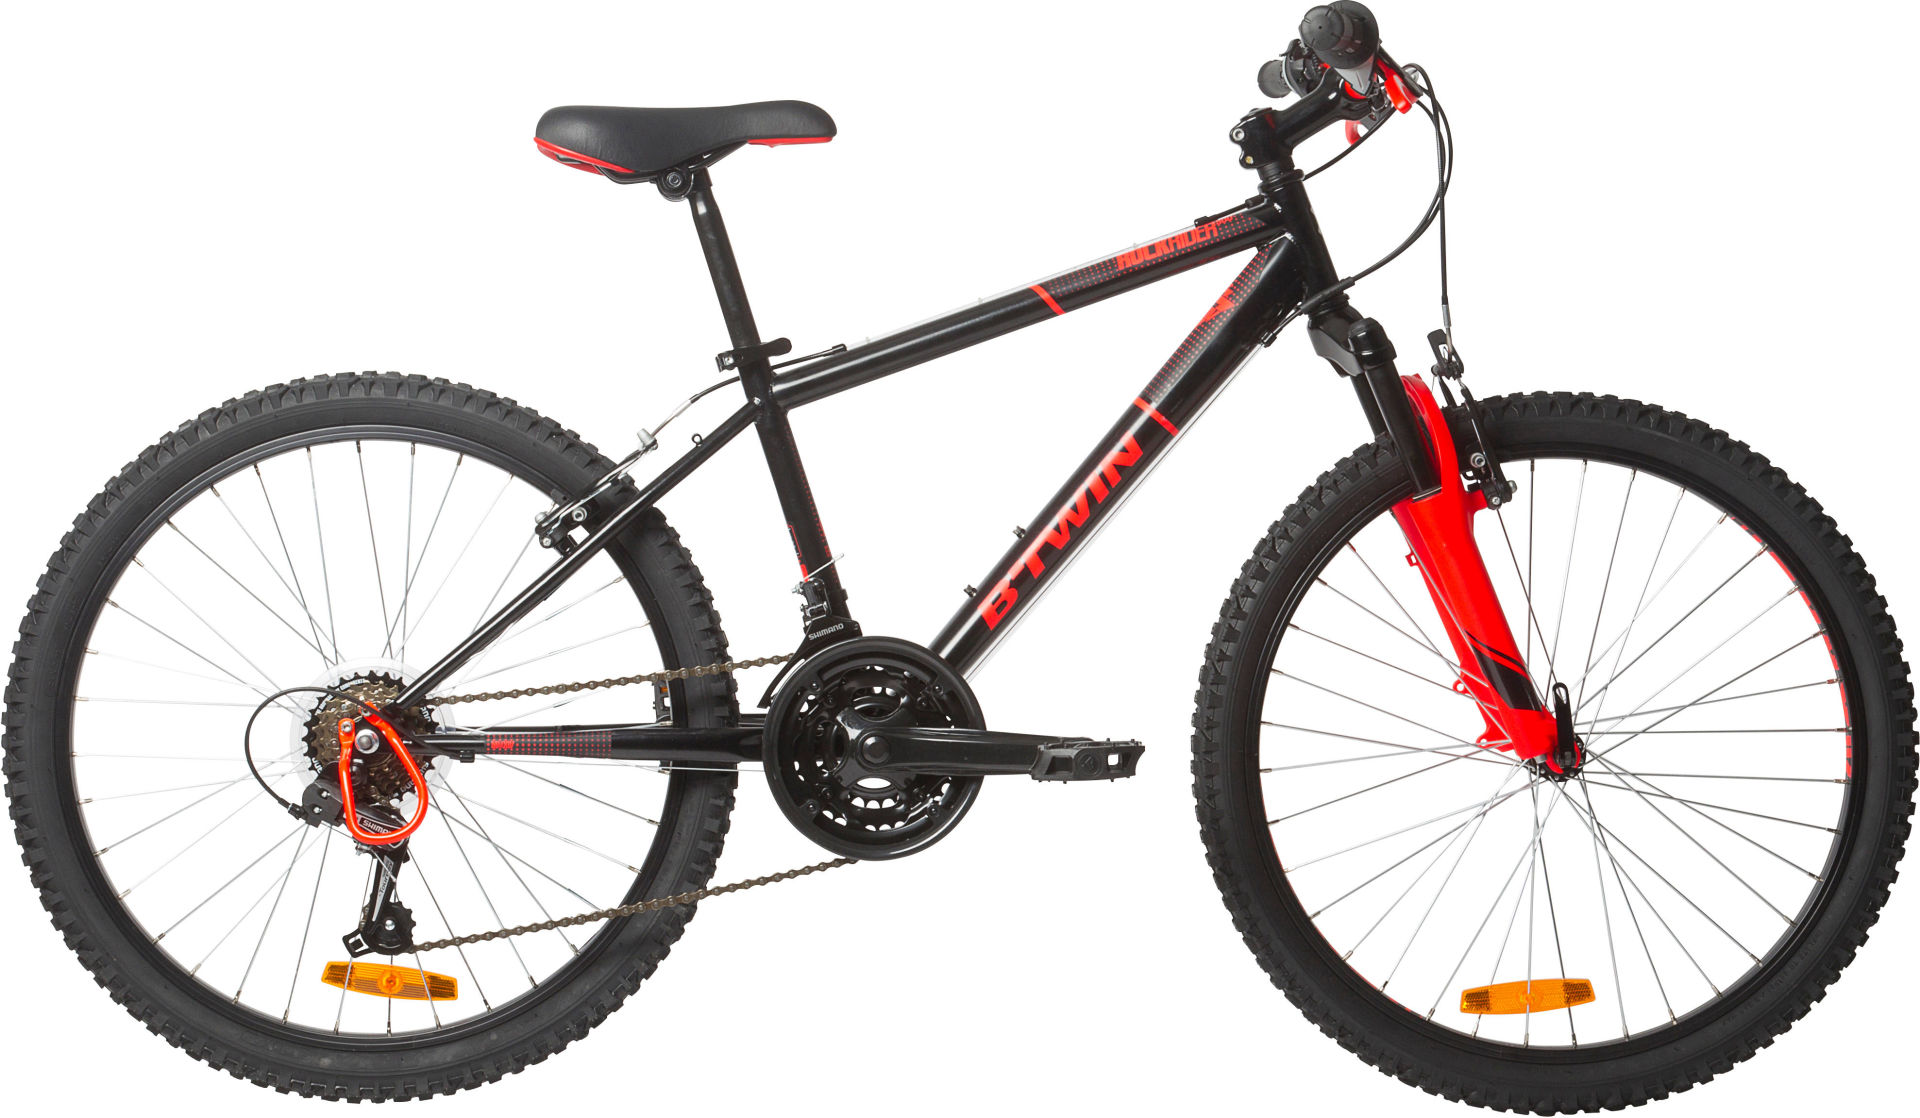 Bicicleta Btwin Rockrider 500 Store, SAVE | vlr.eng.br